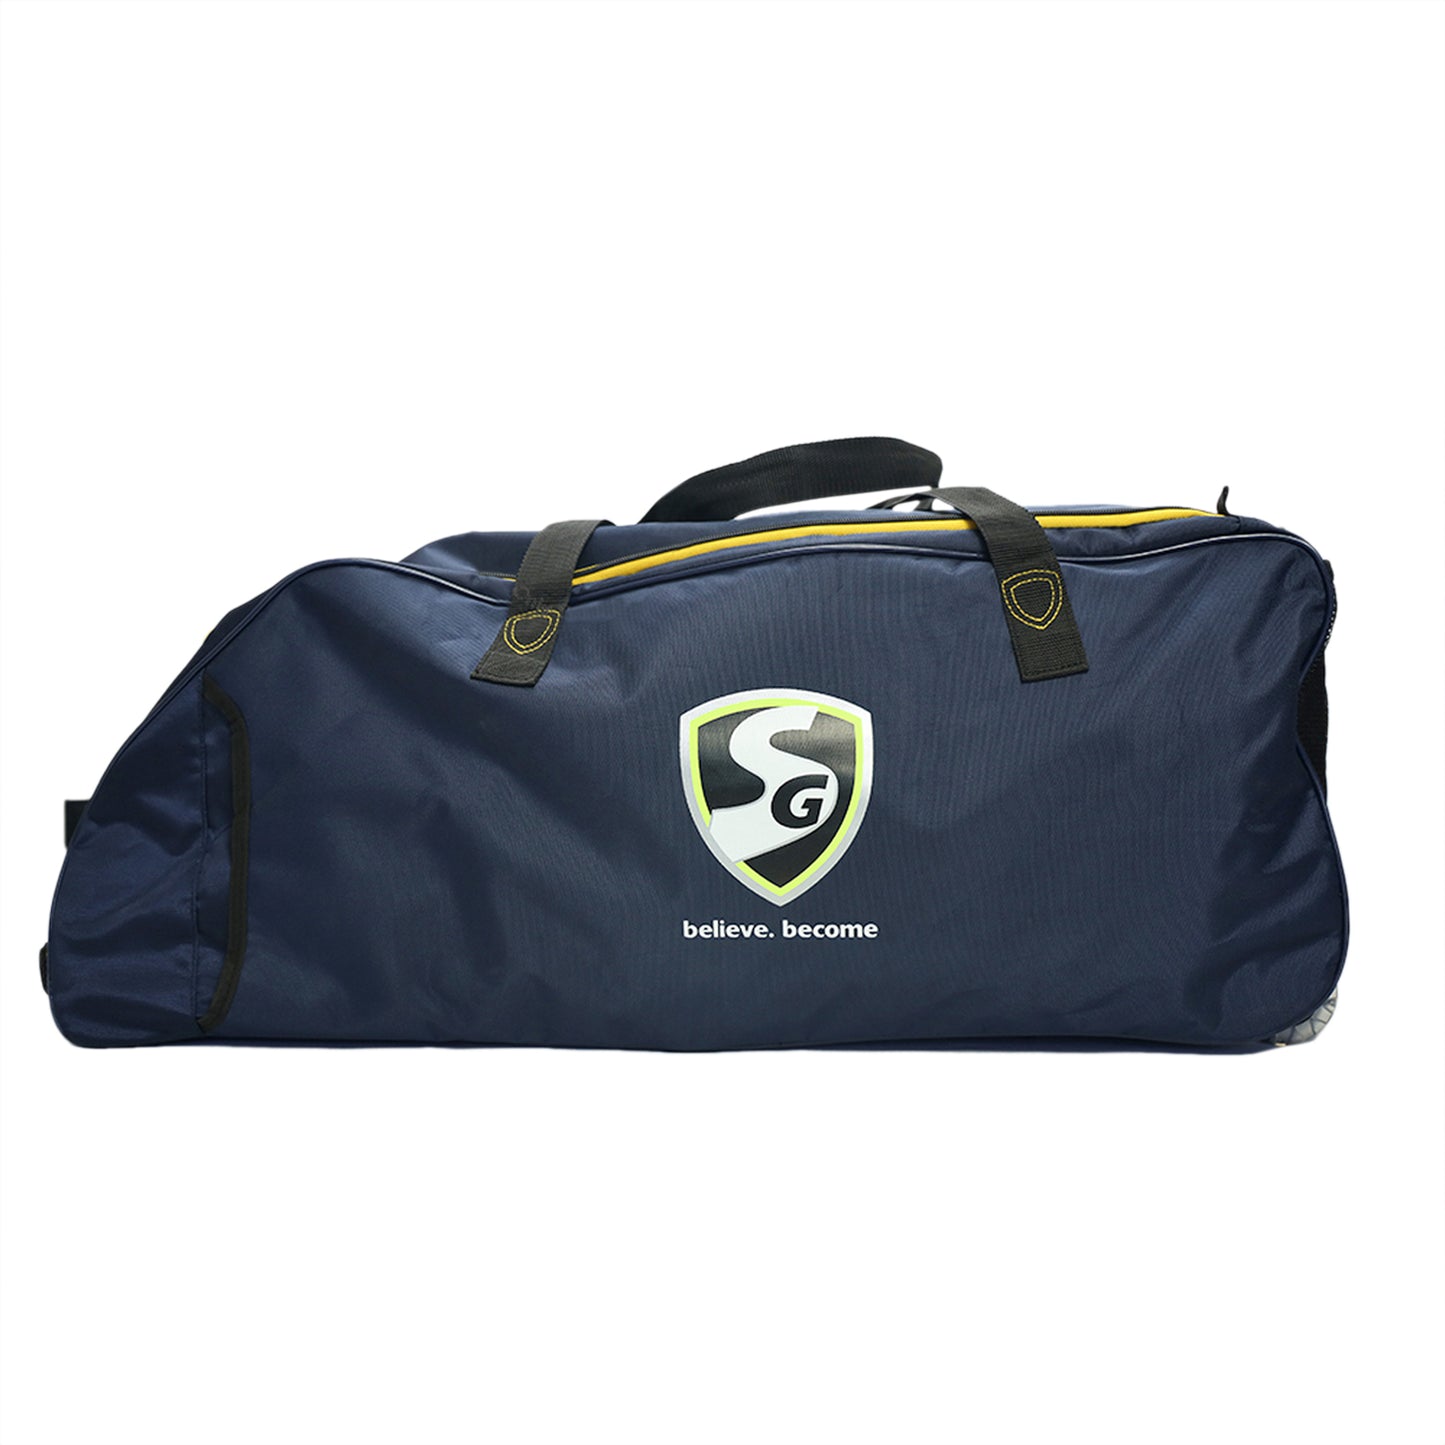 SG ExtremePak Plus Trolley Cricket Kitbag, Large - Best Price online Prokicksports.com